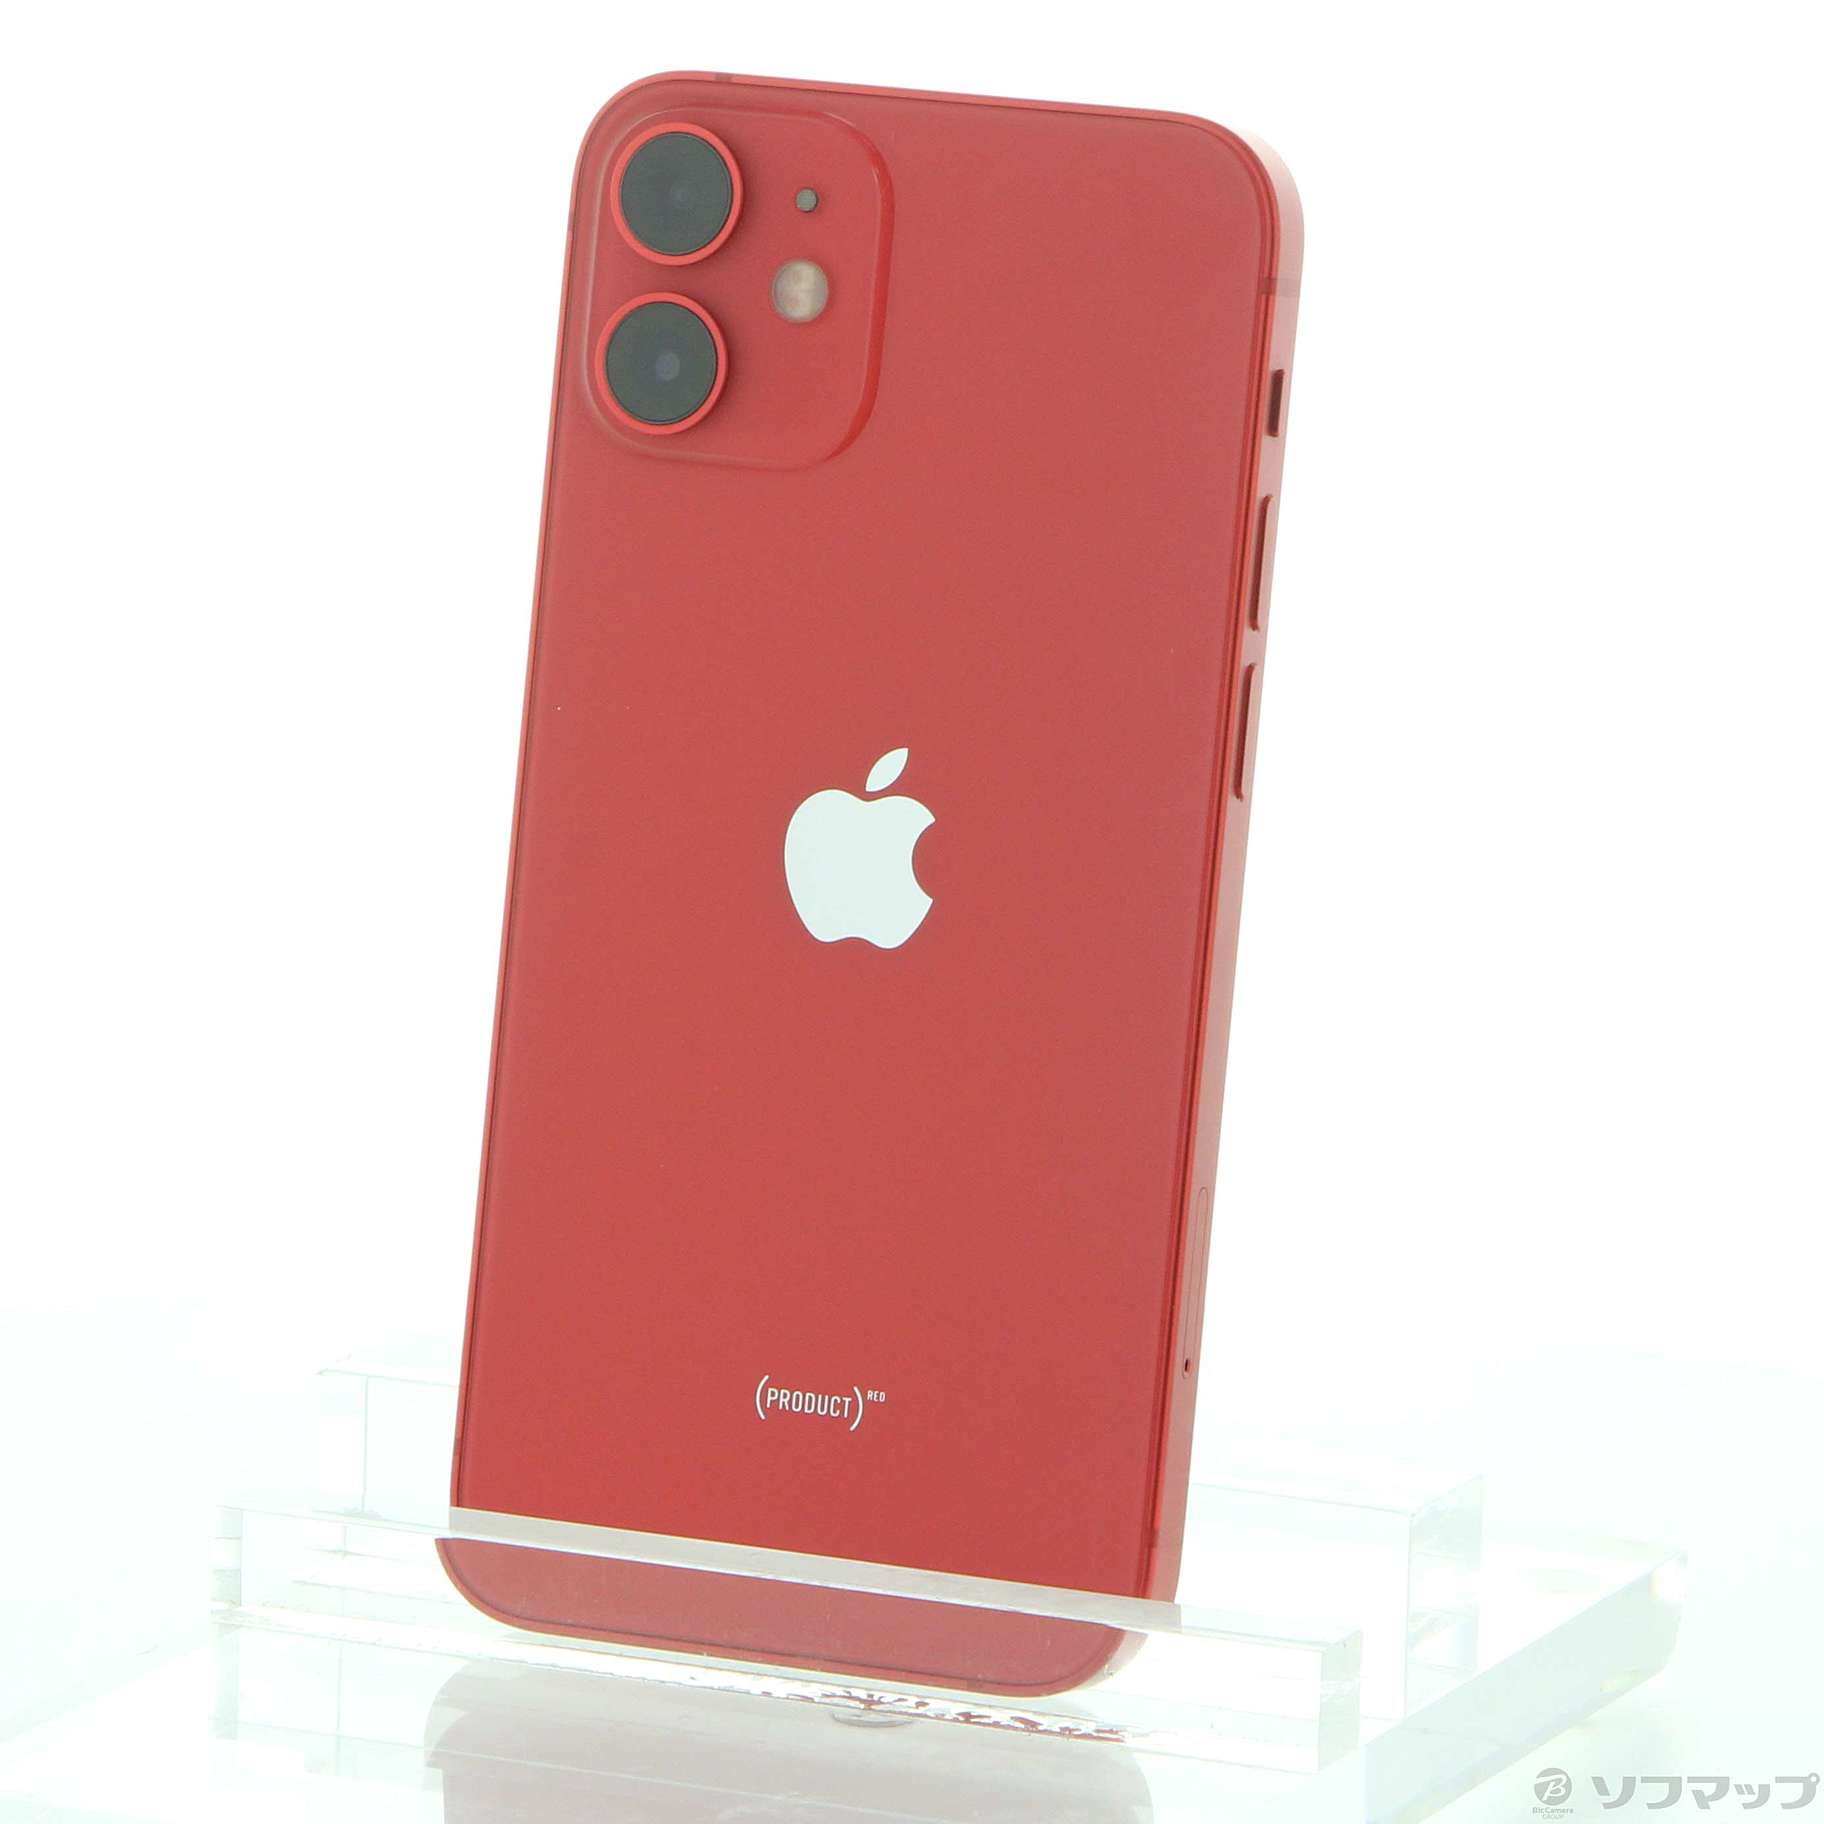 iPhone 12 mini (PRODUCT)RED 64GB SIMフリー [レッド] 中古(白ロム ...